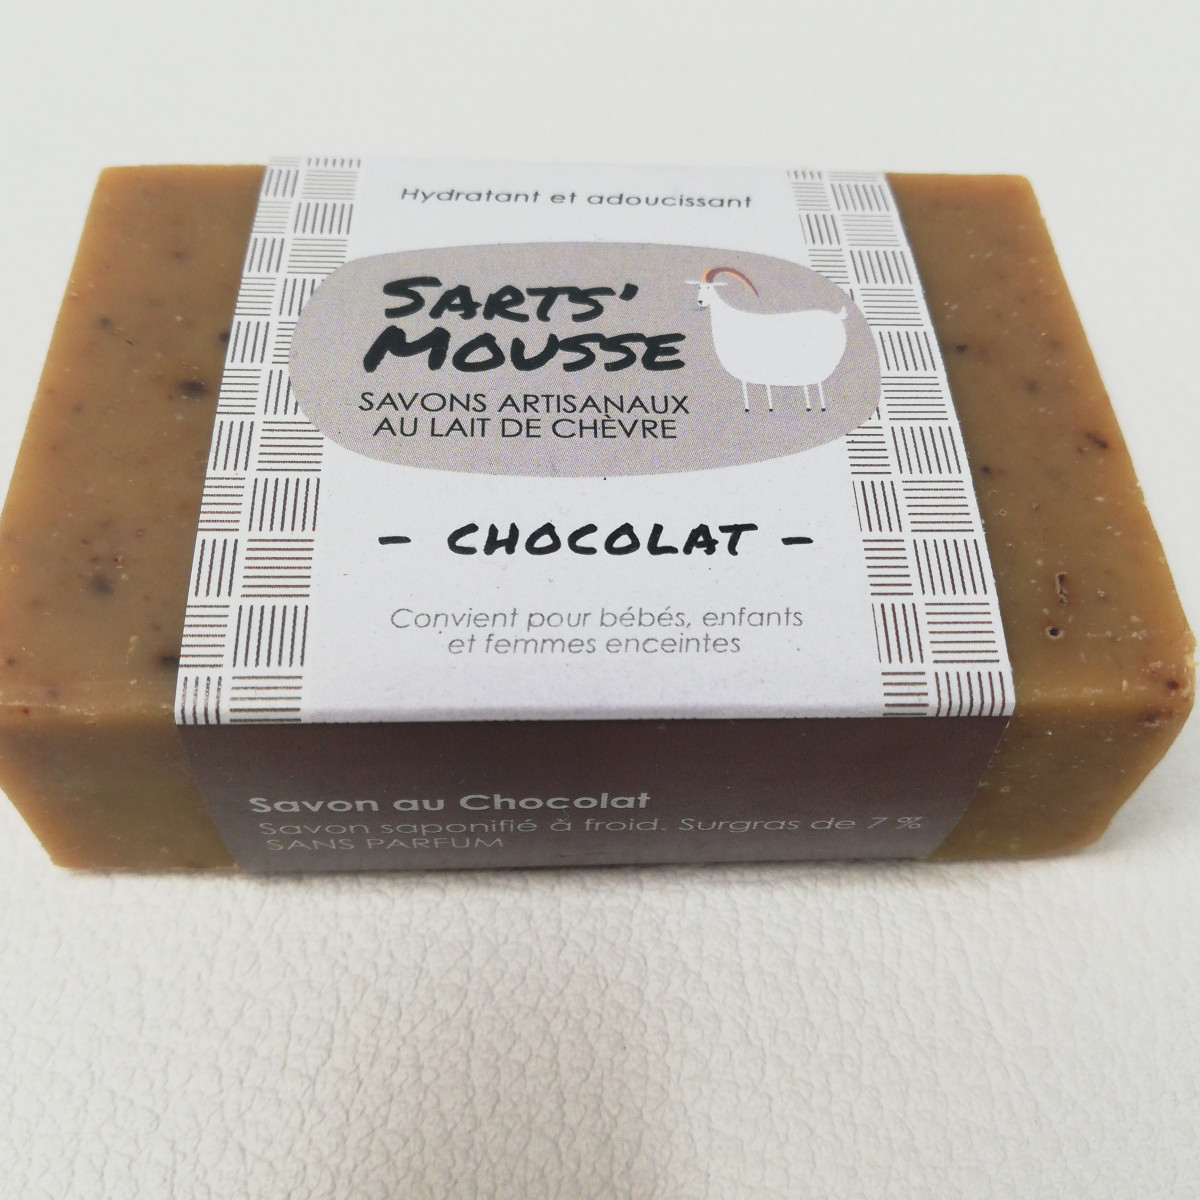 Savon Sart's mousse "Chocolat" - photo 6